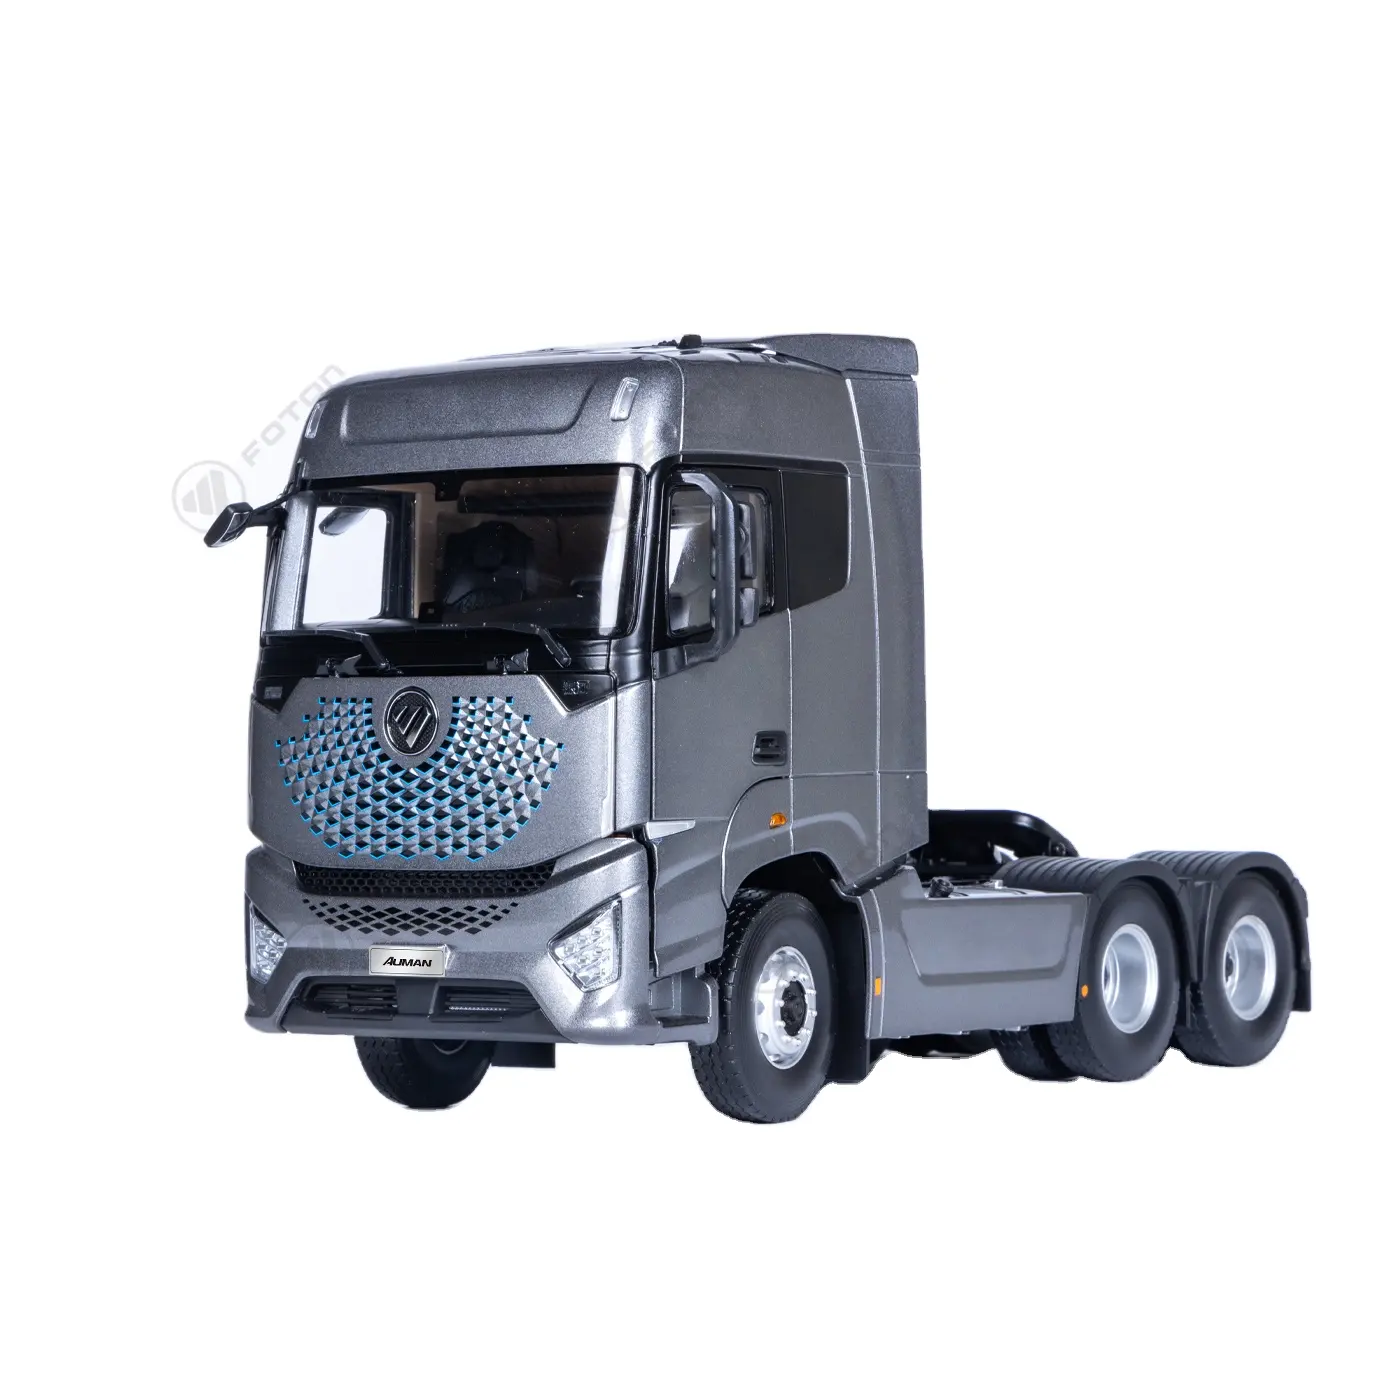 Foton Auman R Galaxy traktör ağır kamyon modeli araba kurumsal hediye seti lüks promosyon